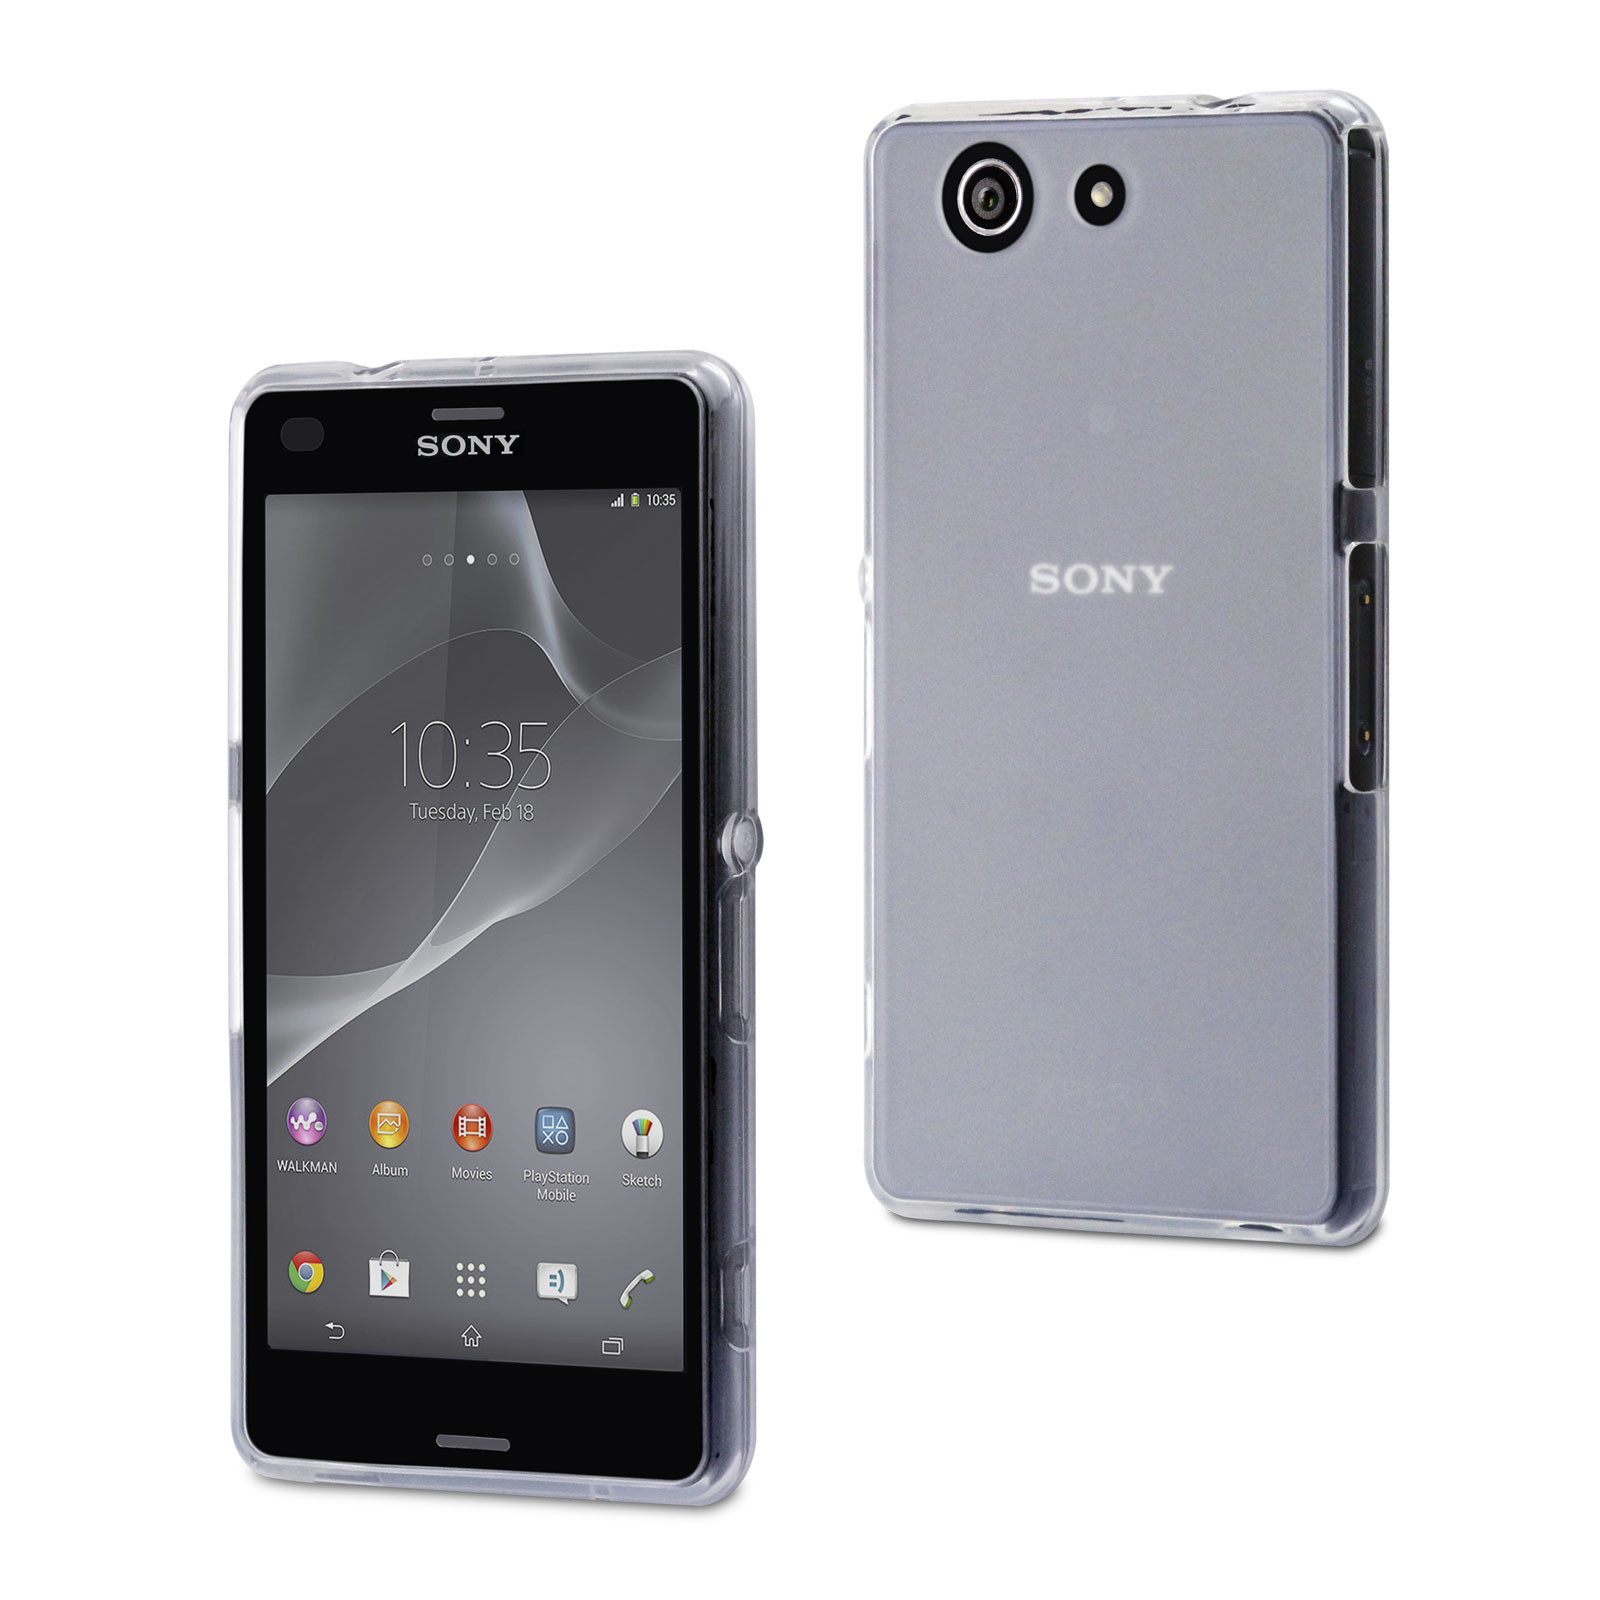 Чехол телефон сони. Sony Xperia z3 Compact. Xperia z3 Mini. Sony Xperia z3 Compact чехол. Sony d5803.